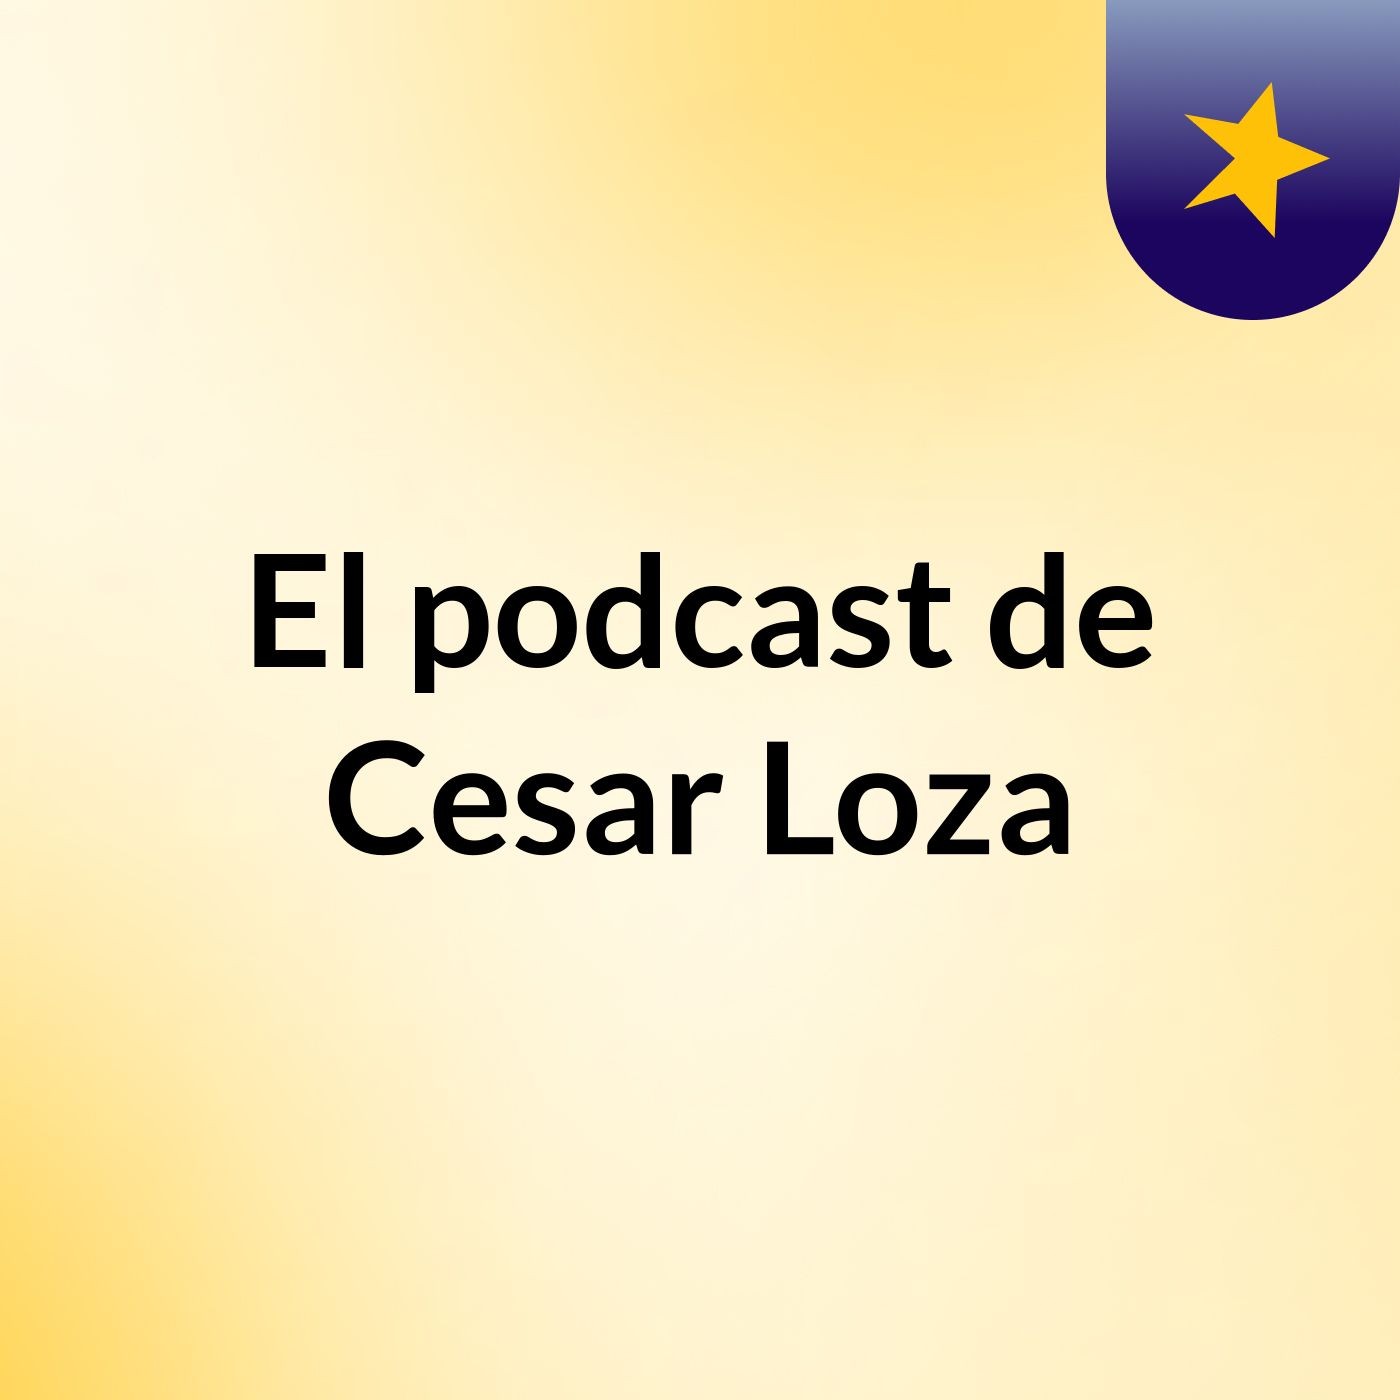 El podcast de Cesar Loza